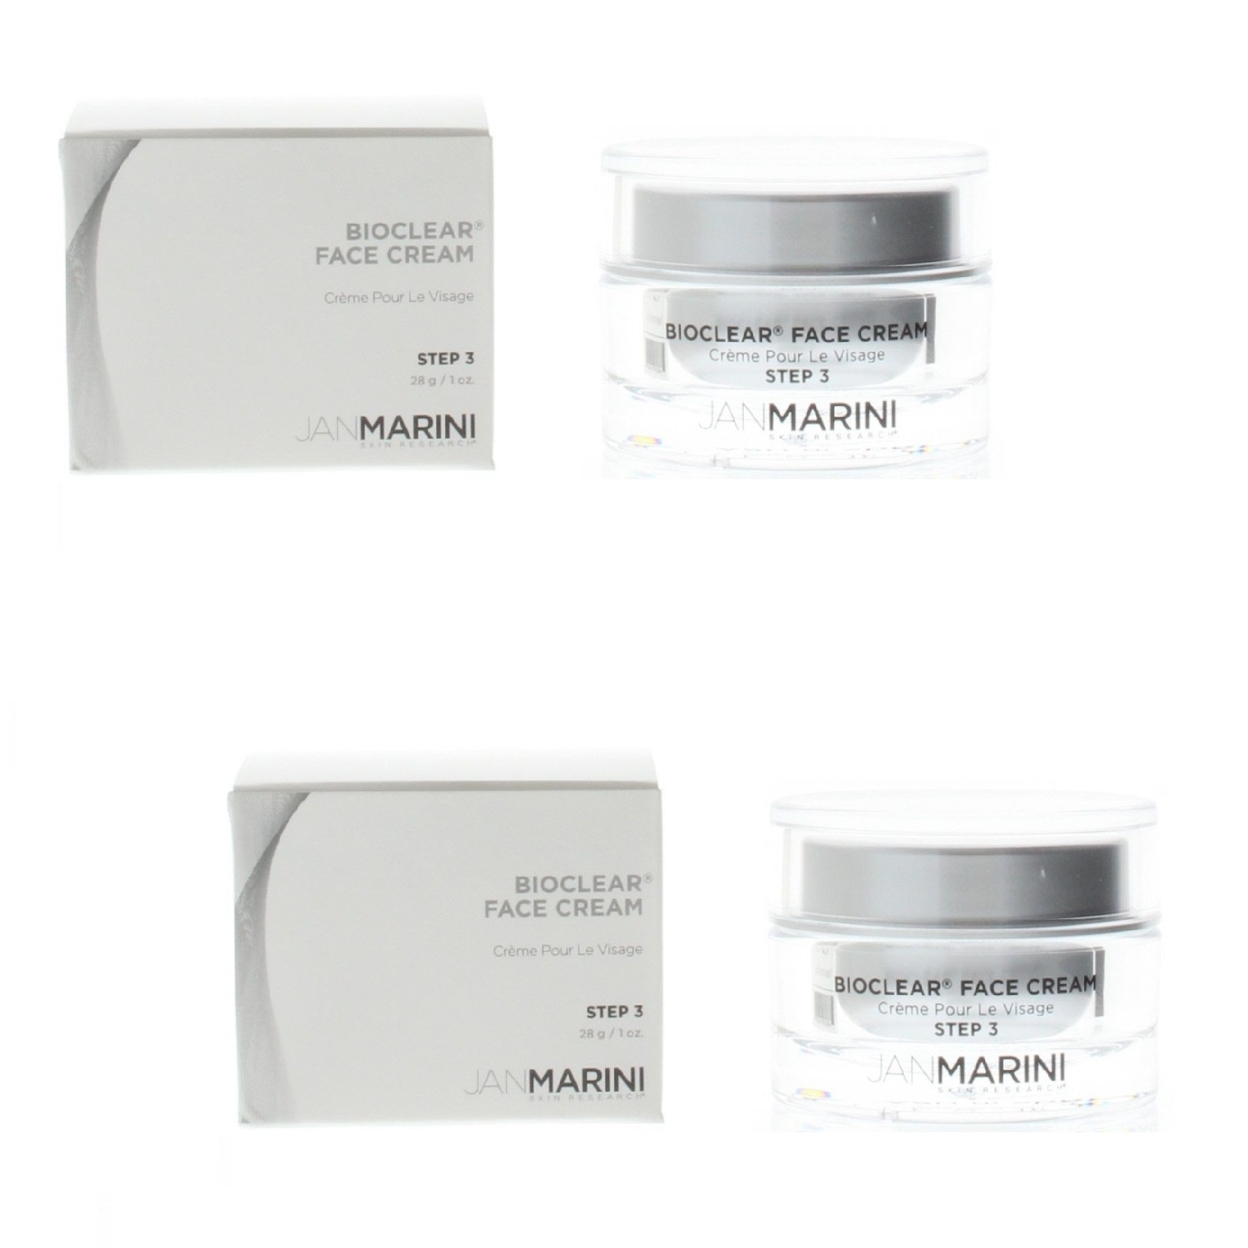 Jan Marini Bioclear Face Cream 1oz (2 Pack)